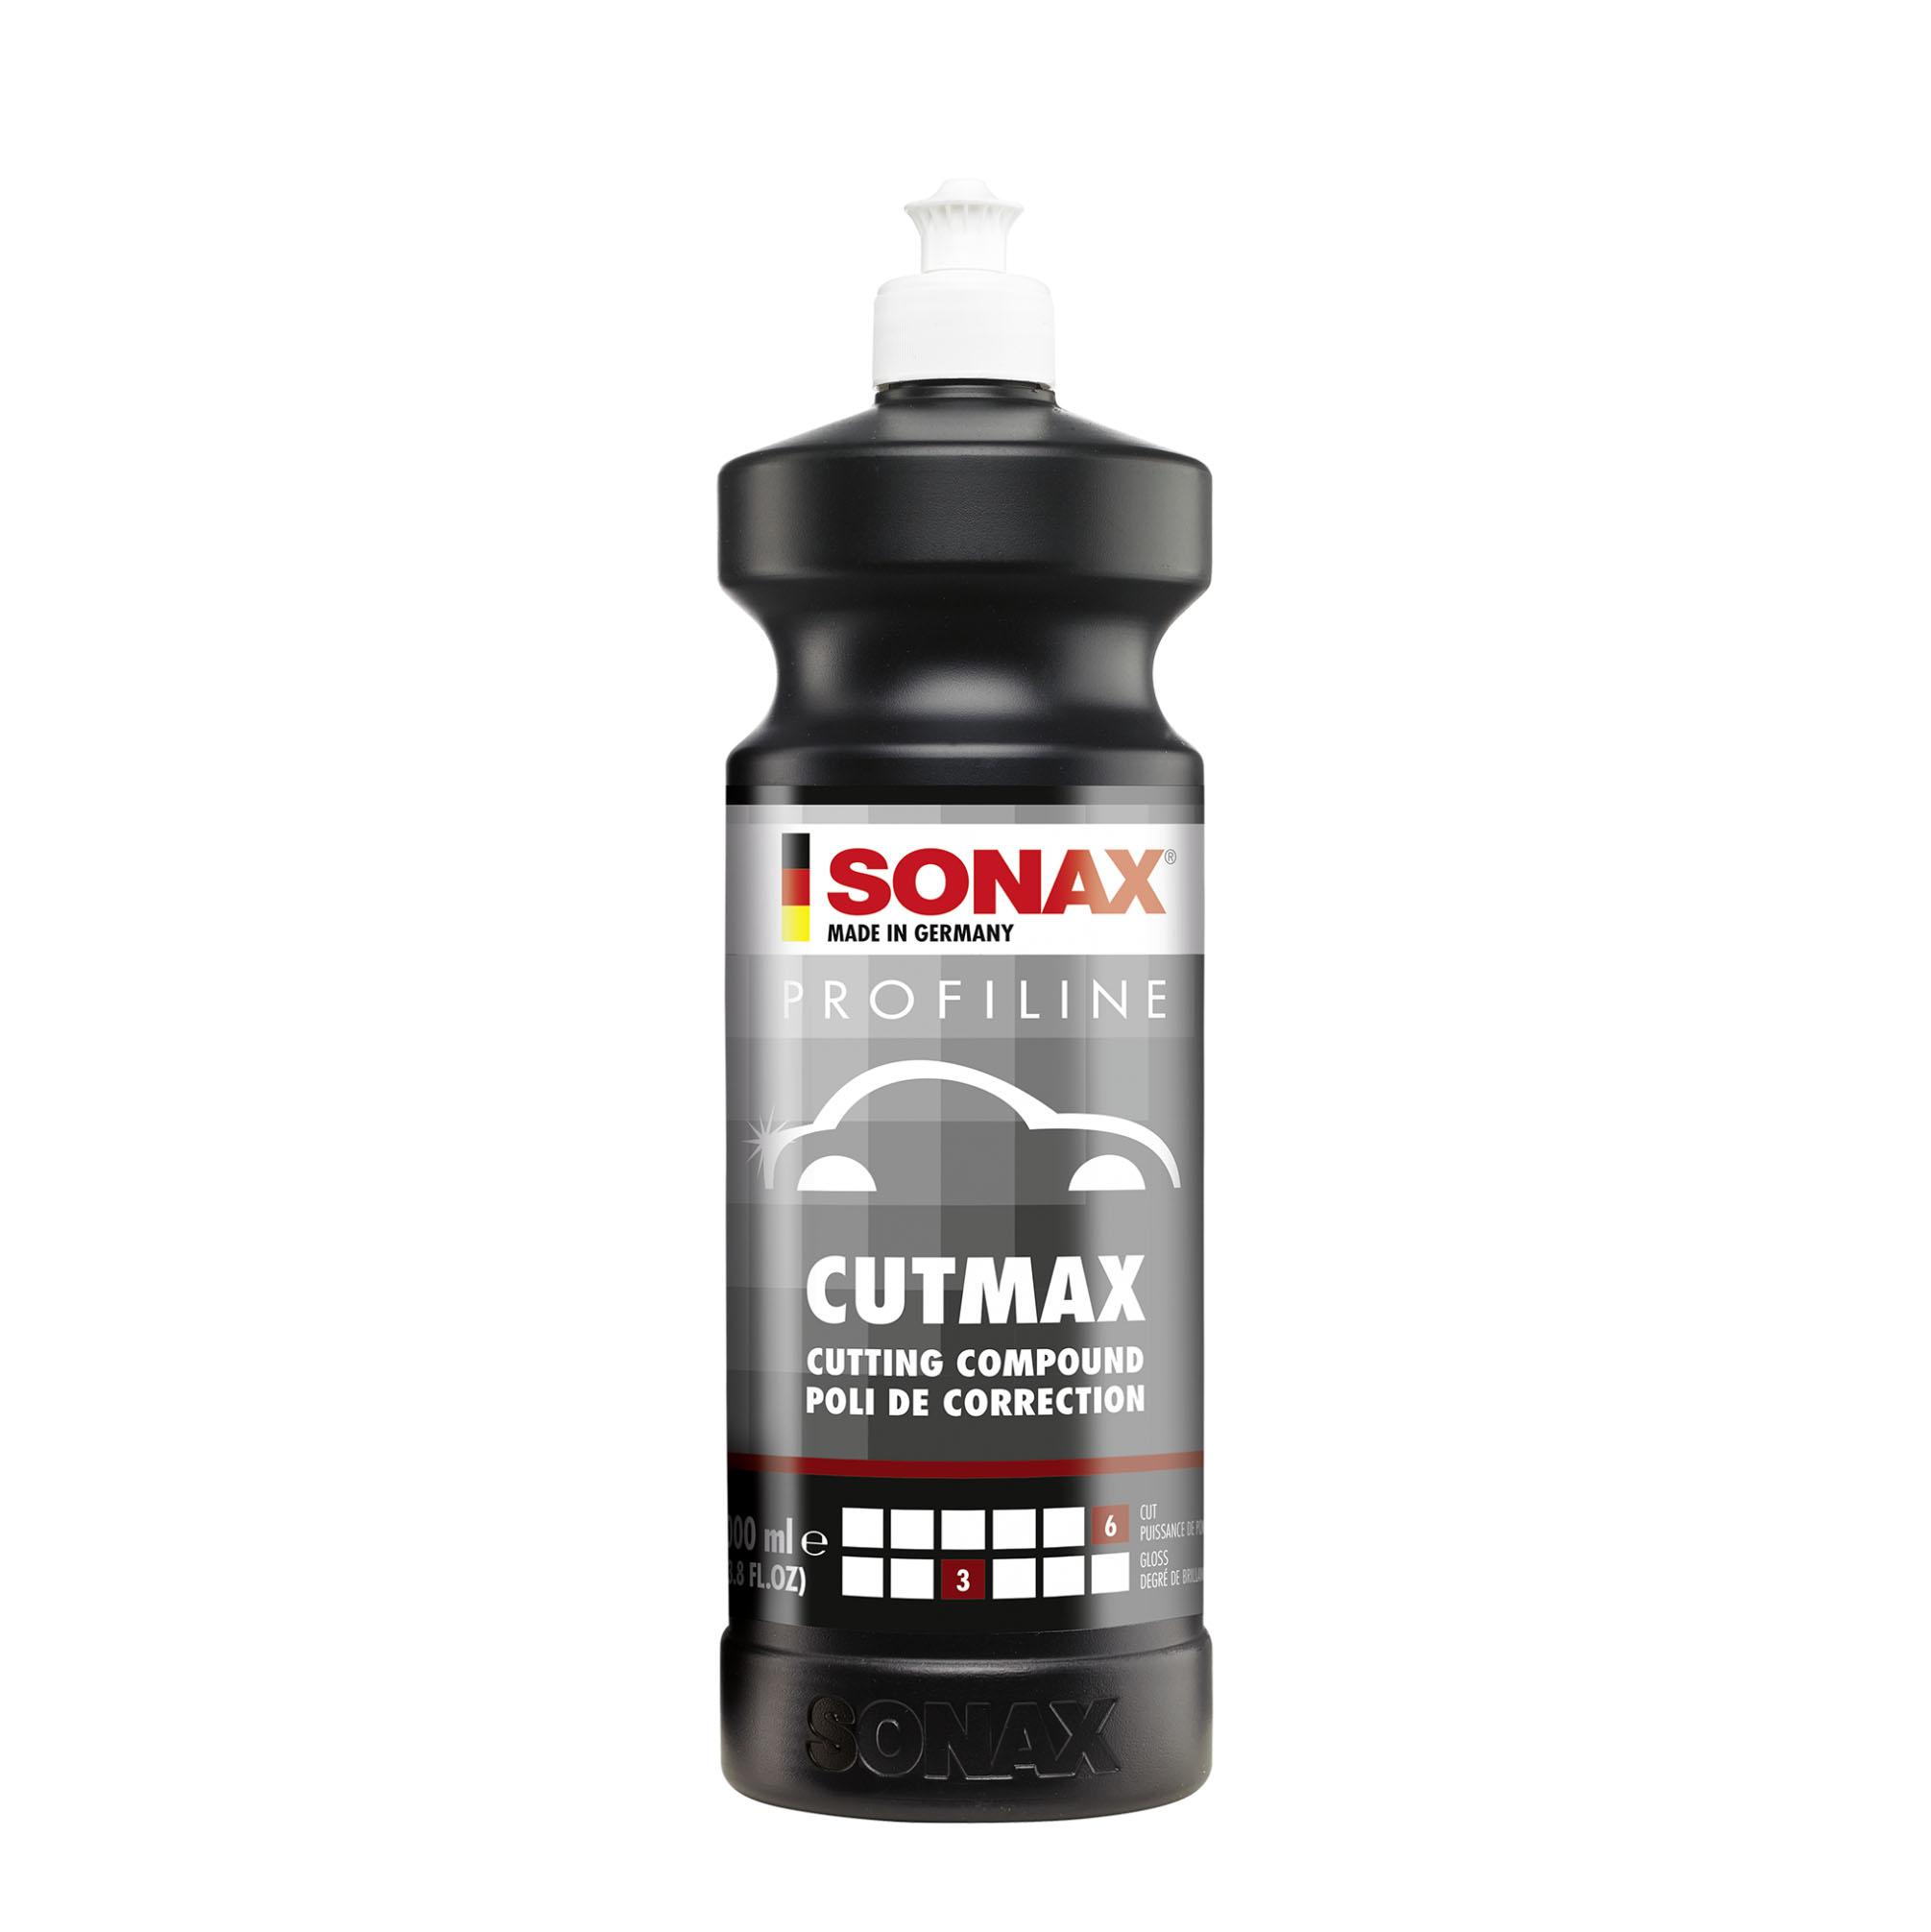 Polermedel Sonax Profiline CutMax, 1000 ml